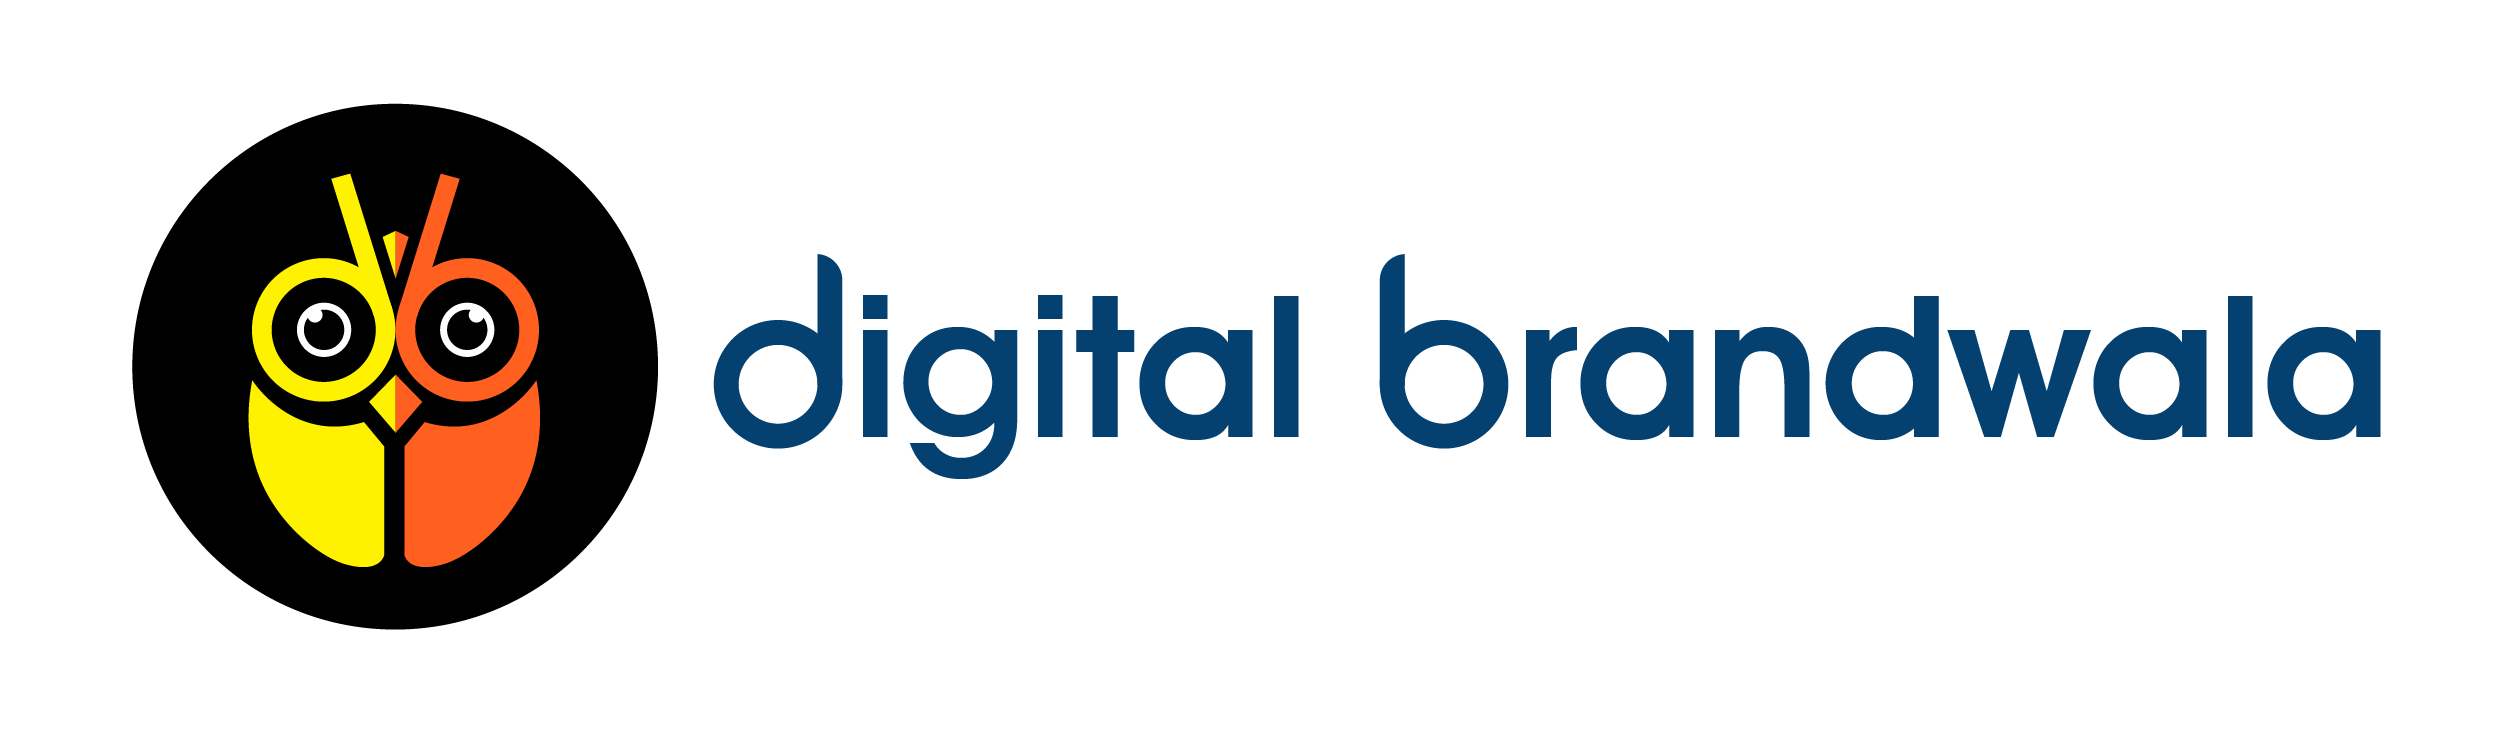 Digital Brandwala